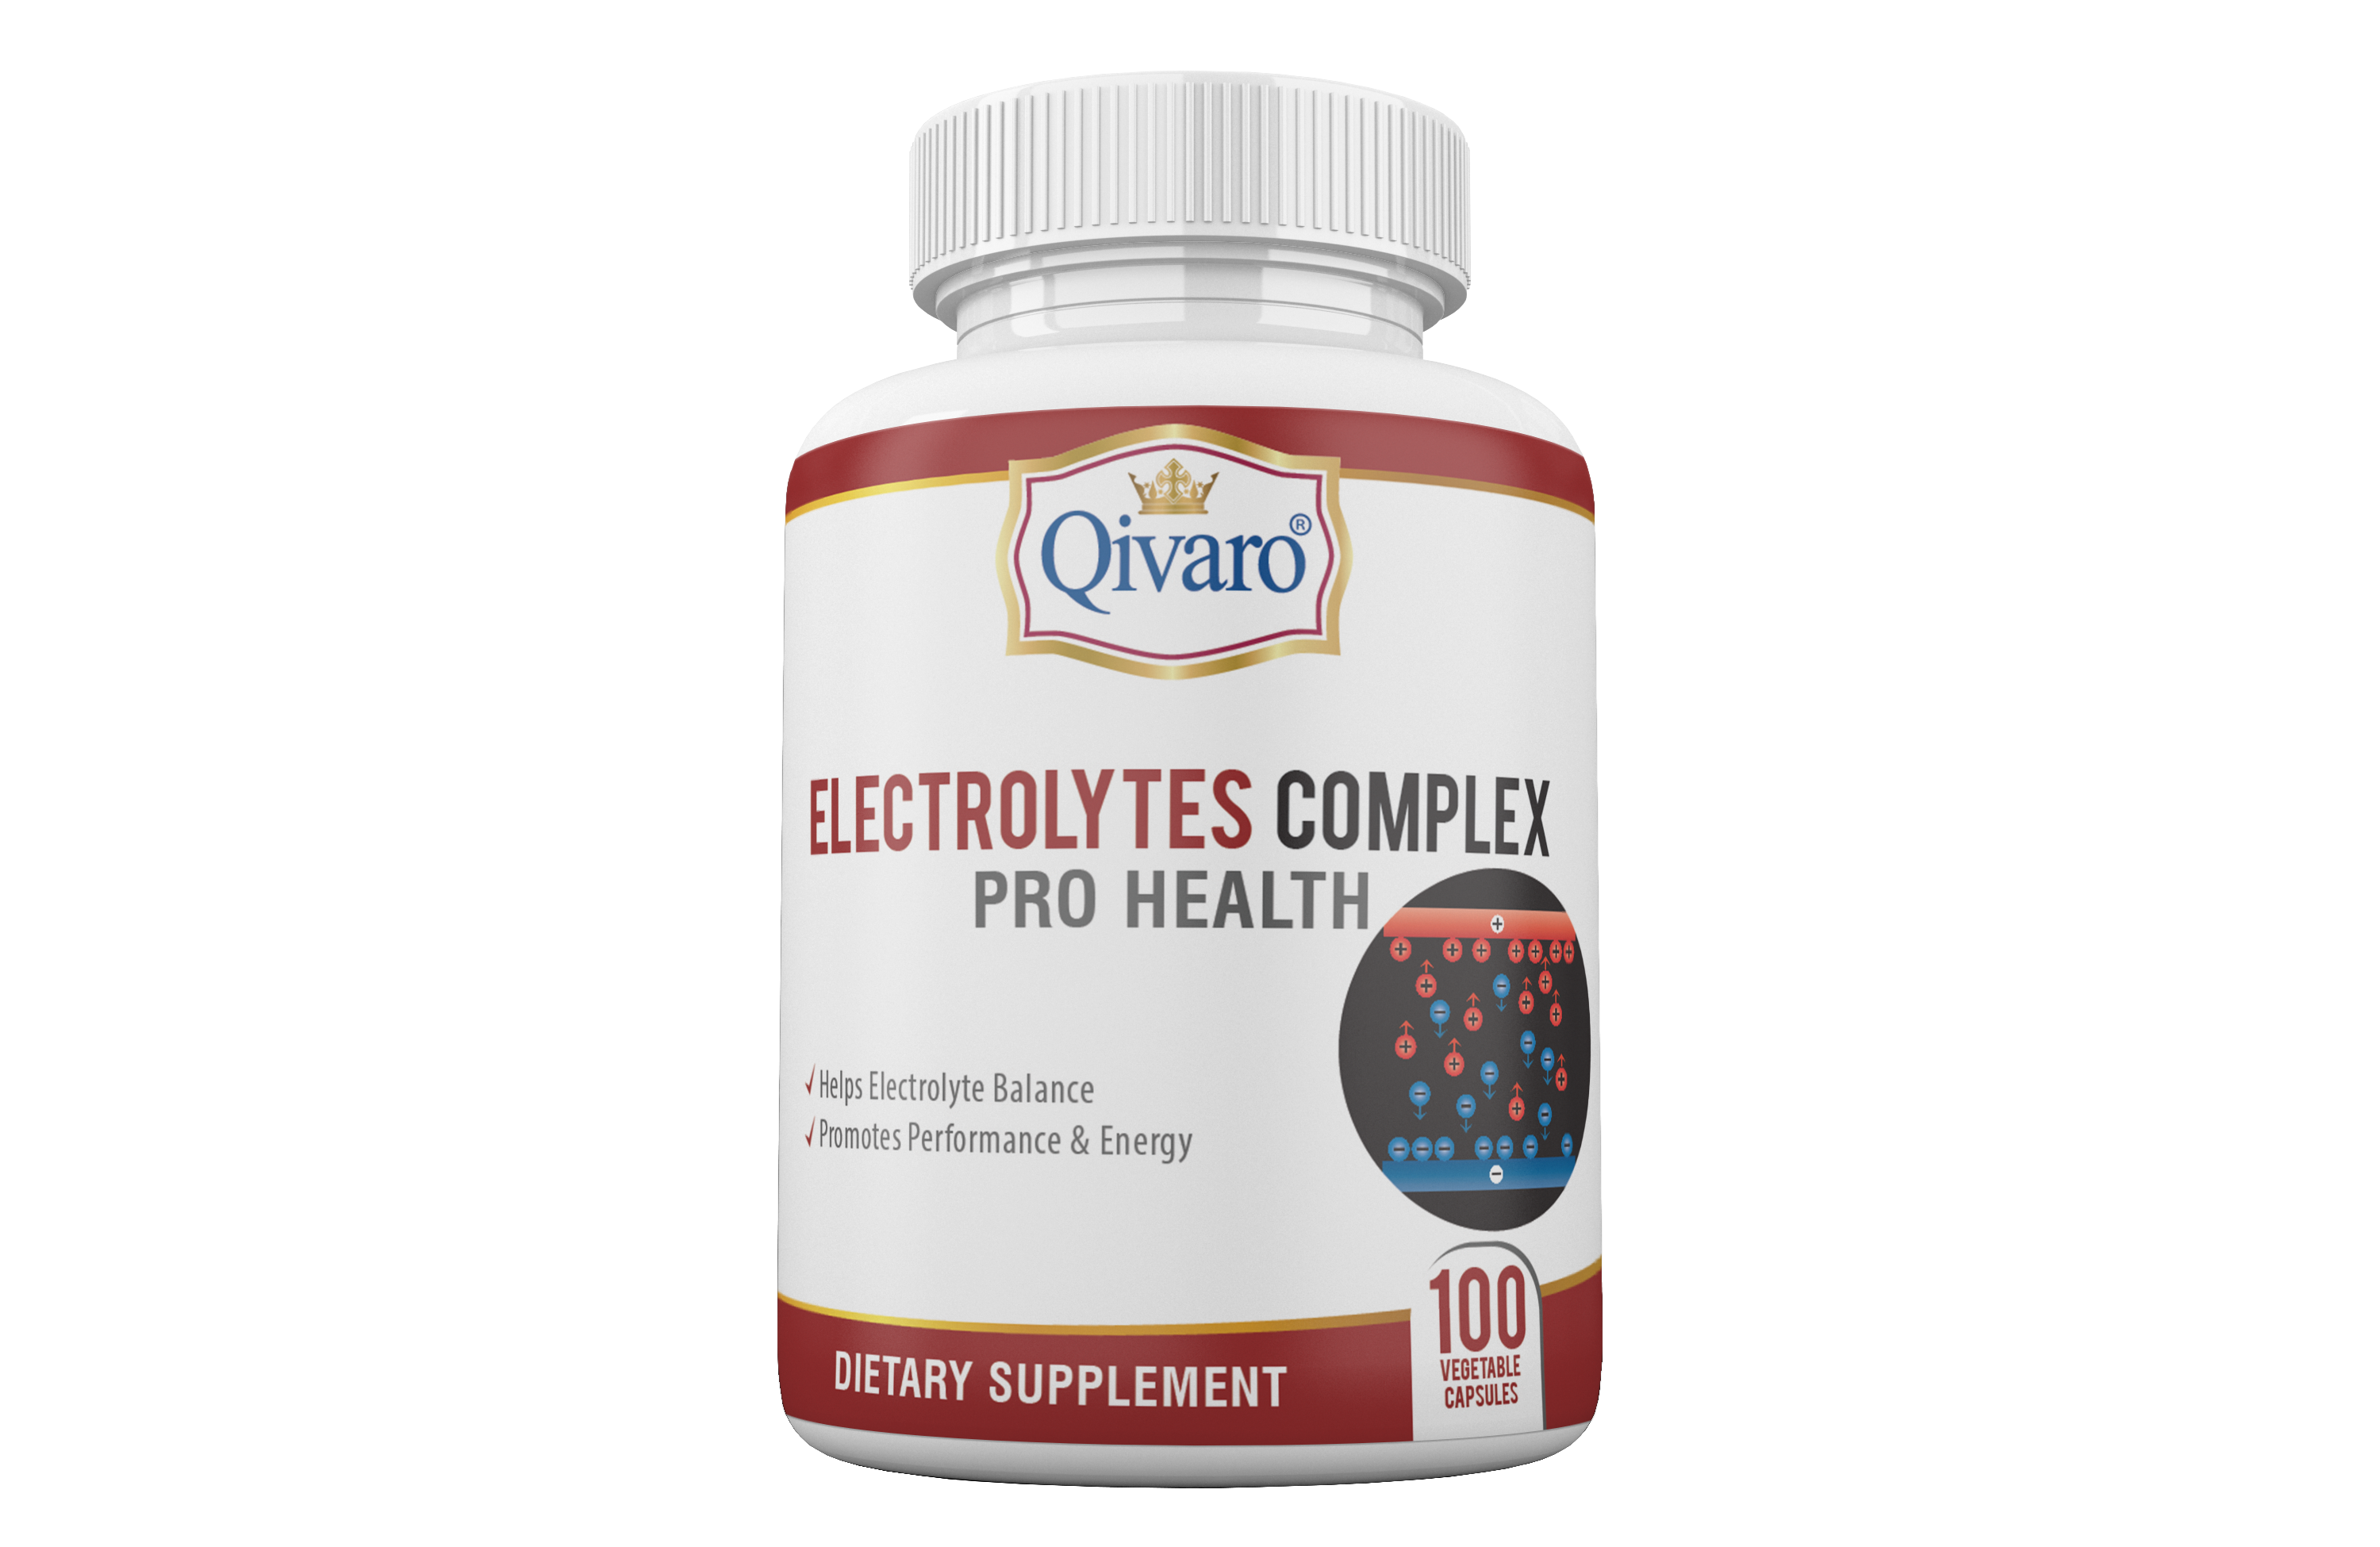 QIH47: Electrolyte Complex Pro Health by Qivaro